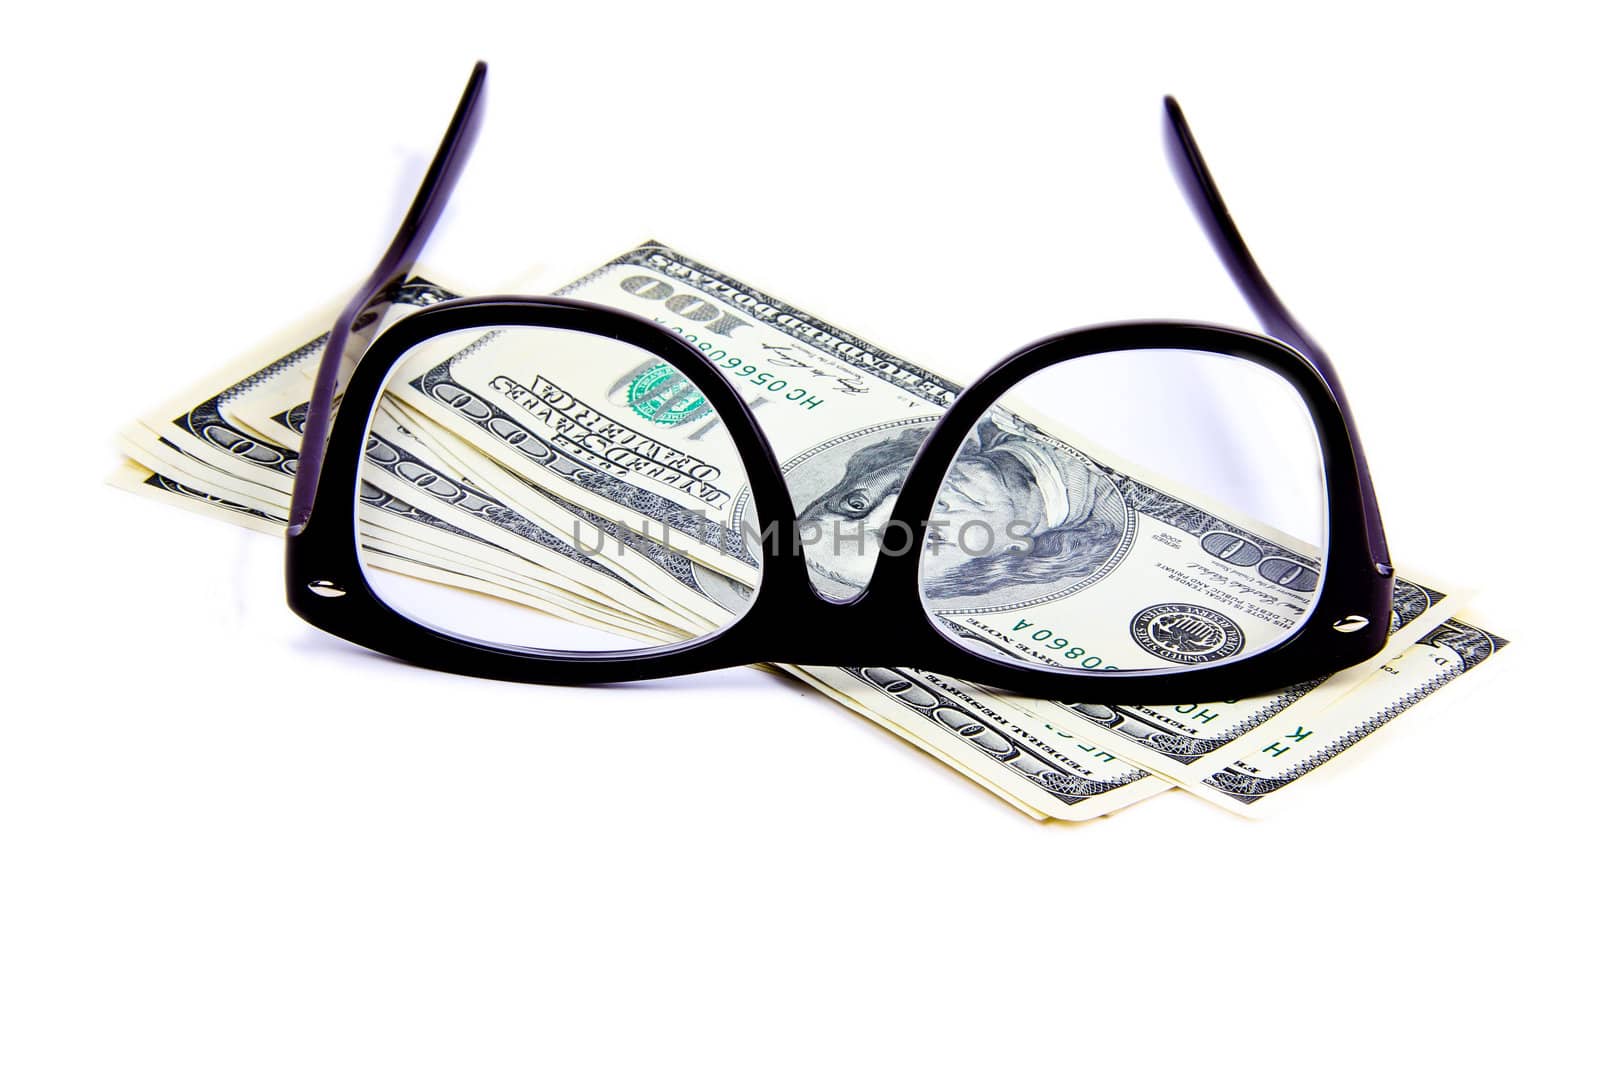 Eyeglasses on hundred dollar notes by dotweb